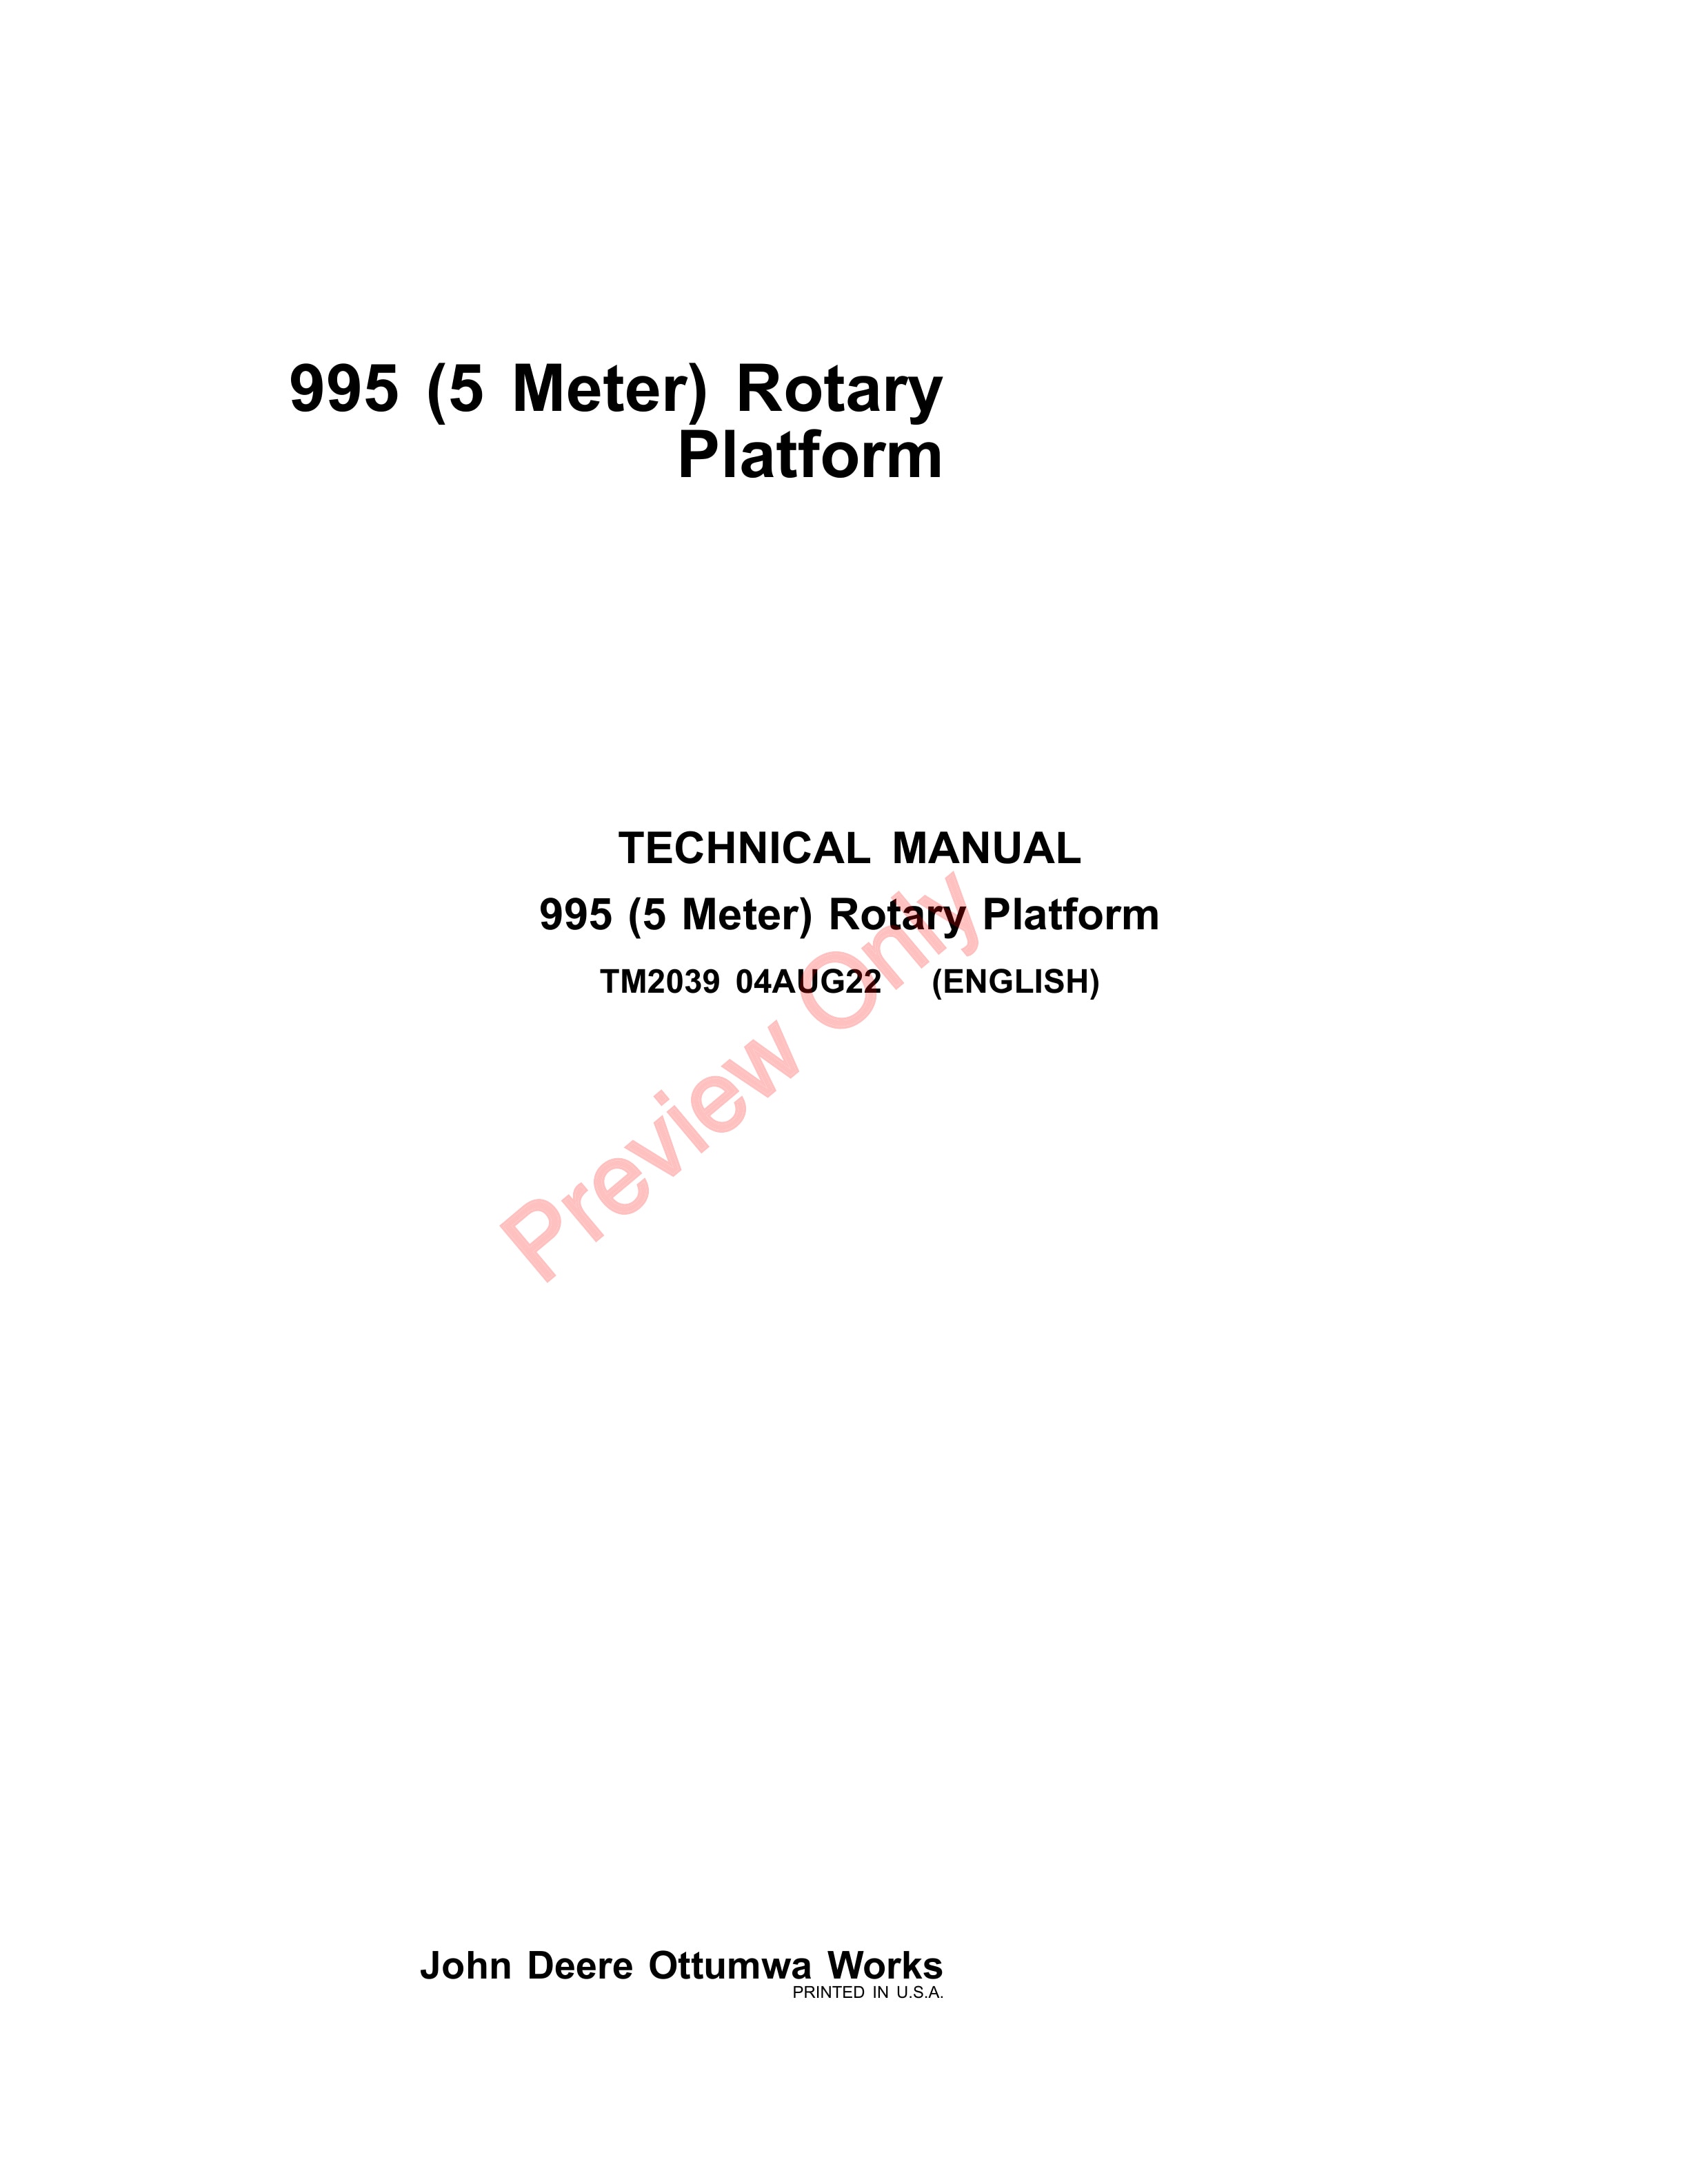 John Deere 995 Rotary Platform 5 Meter Technical Manual TM2039 04AUG22 1